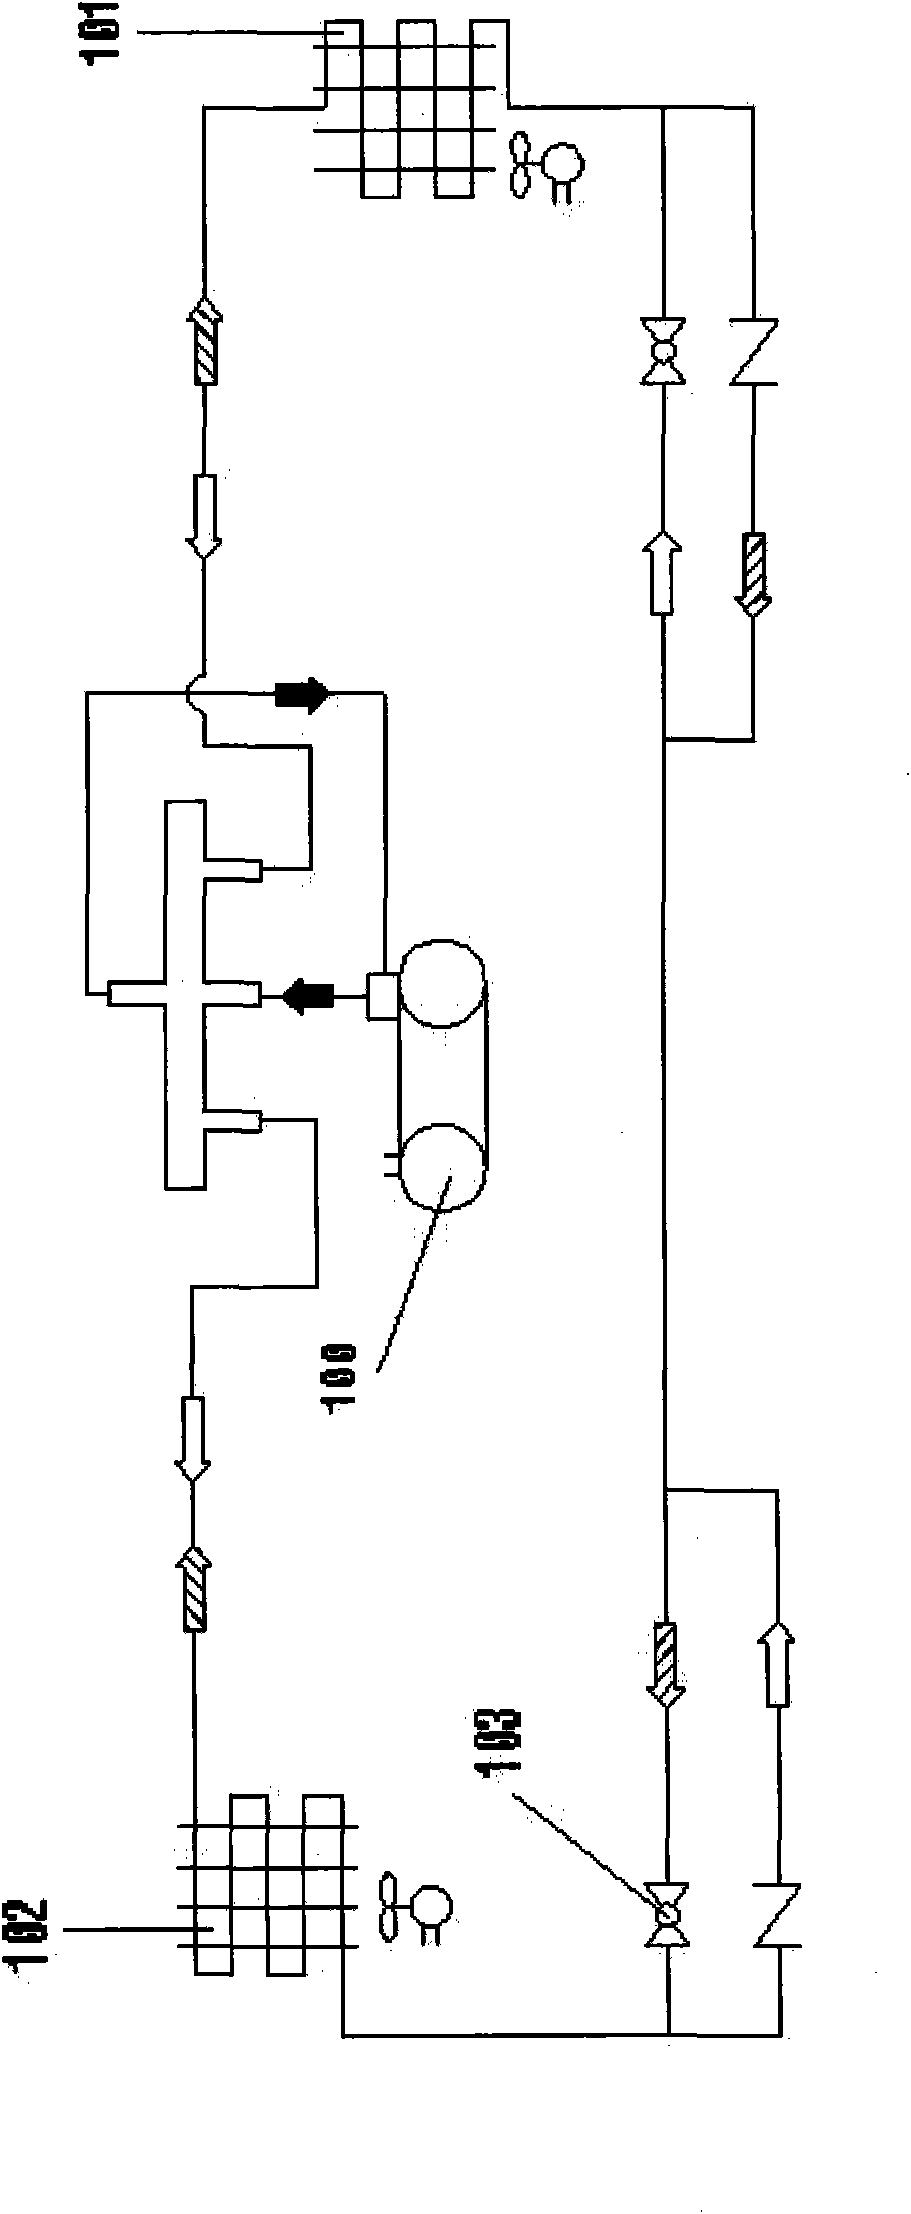 Modularized heat pump unit